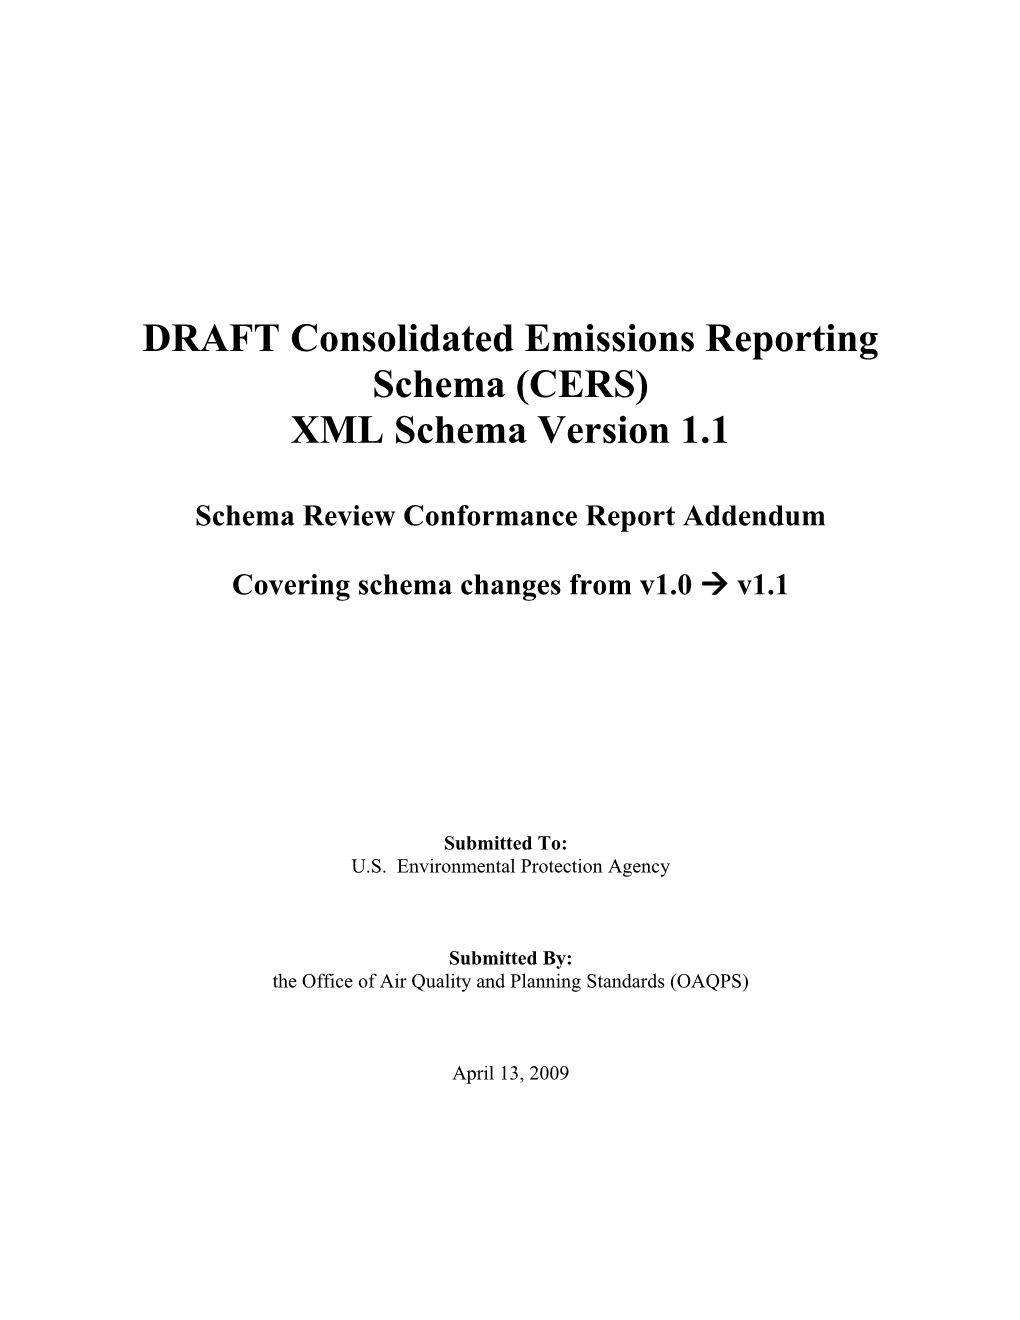 Edwr Schema Review Conformance Report